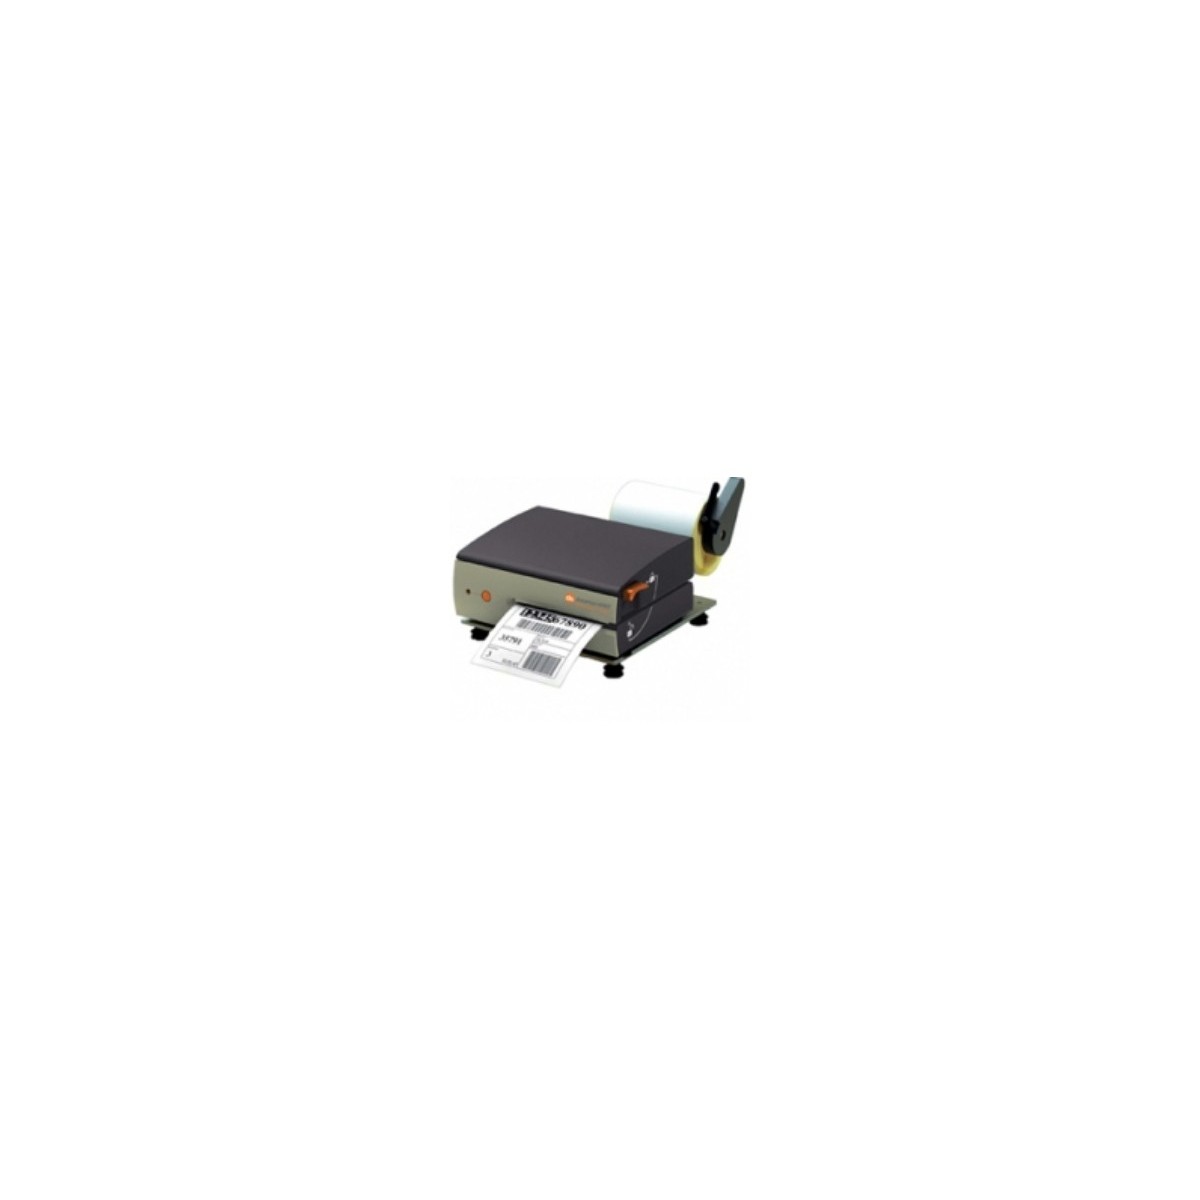 HONEYWELL Compact4 Mark II - Direct thermal - Mobile printer - 125 mm/sec - 15 cm - 40 - 115 mm - 10.4 cm